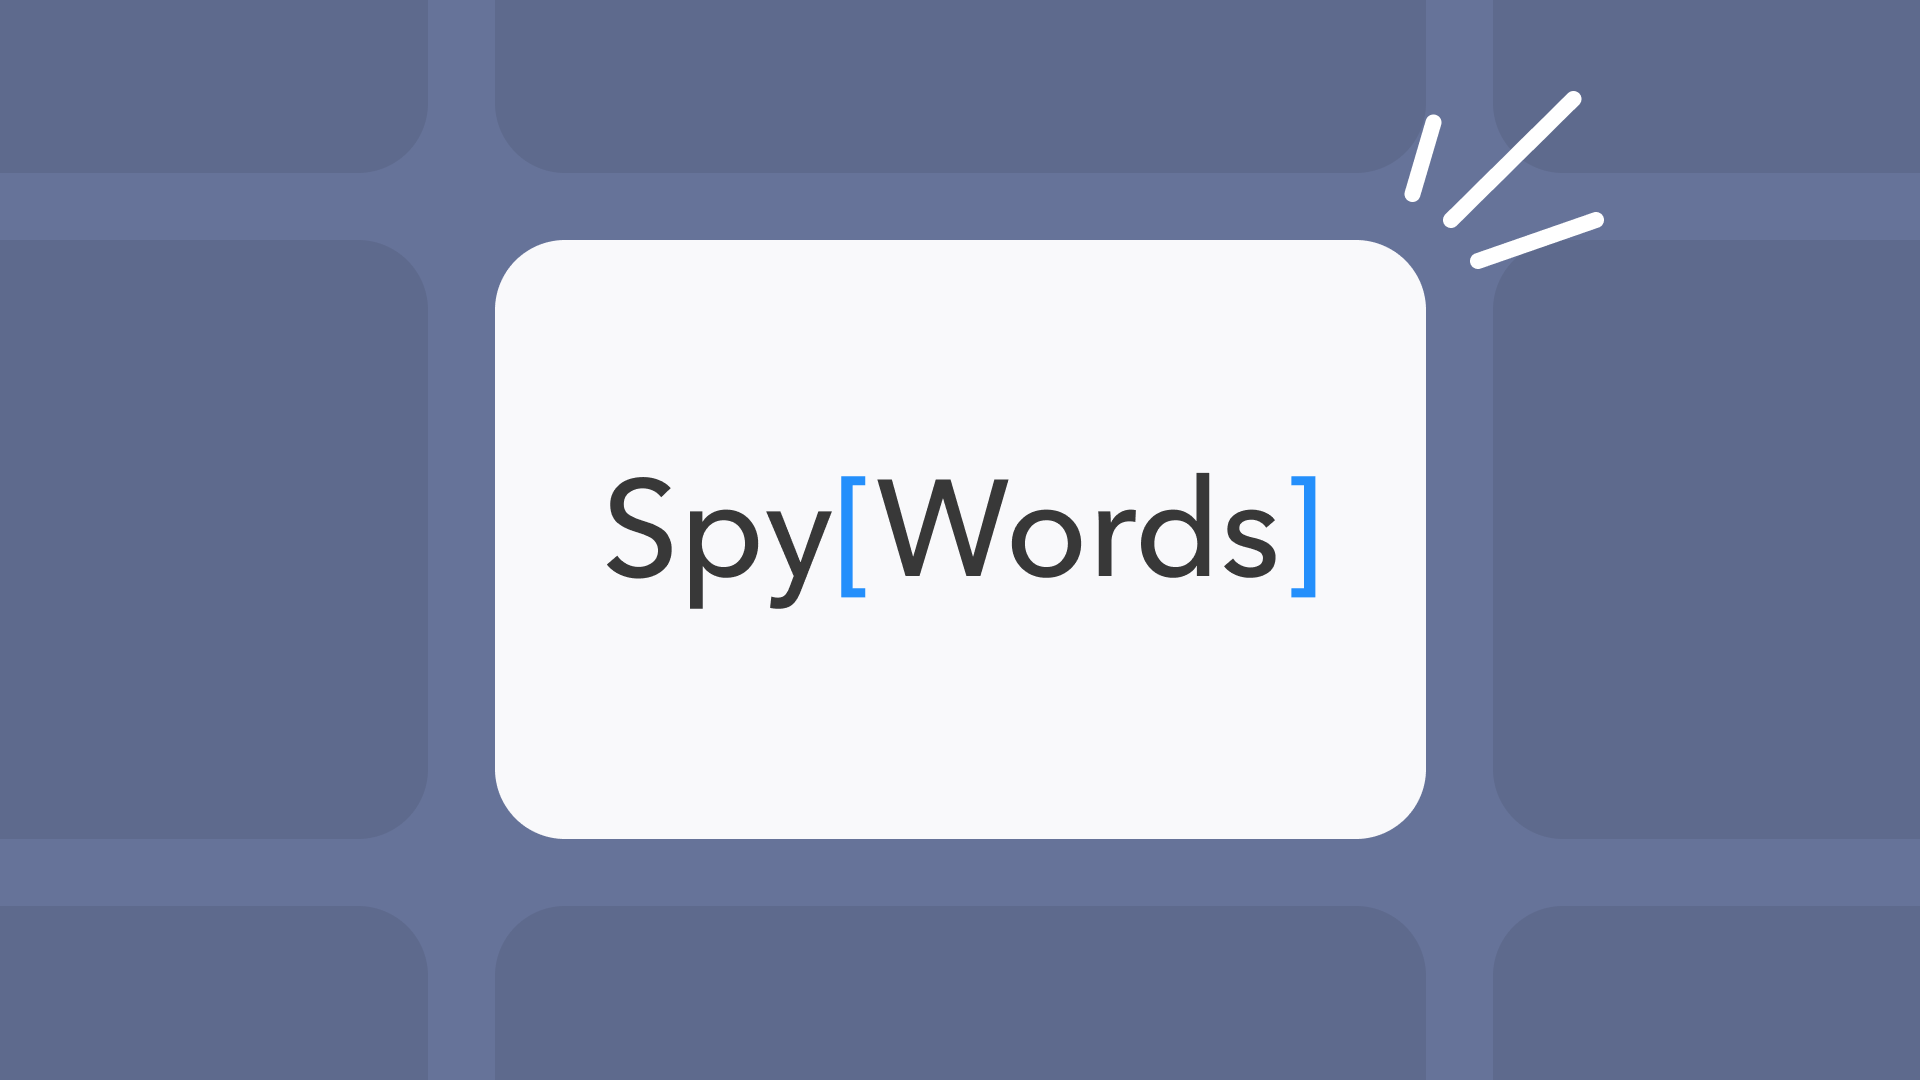 Spy words